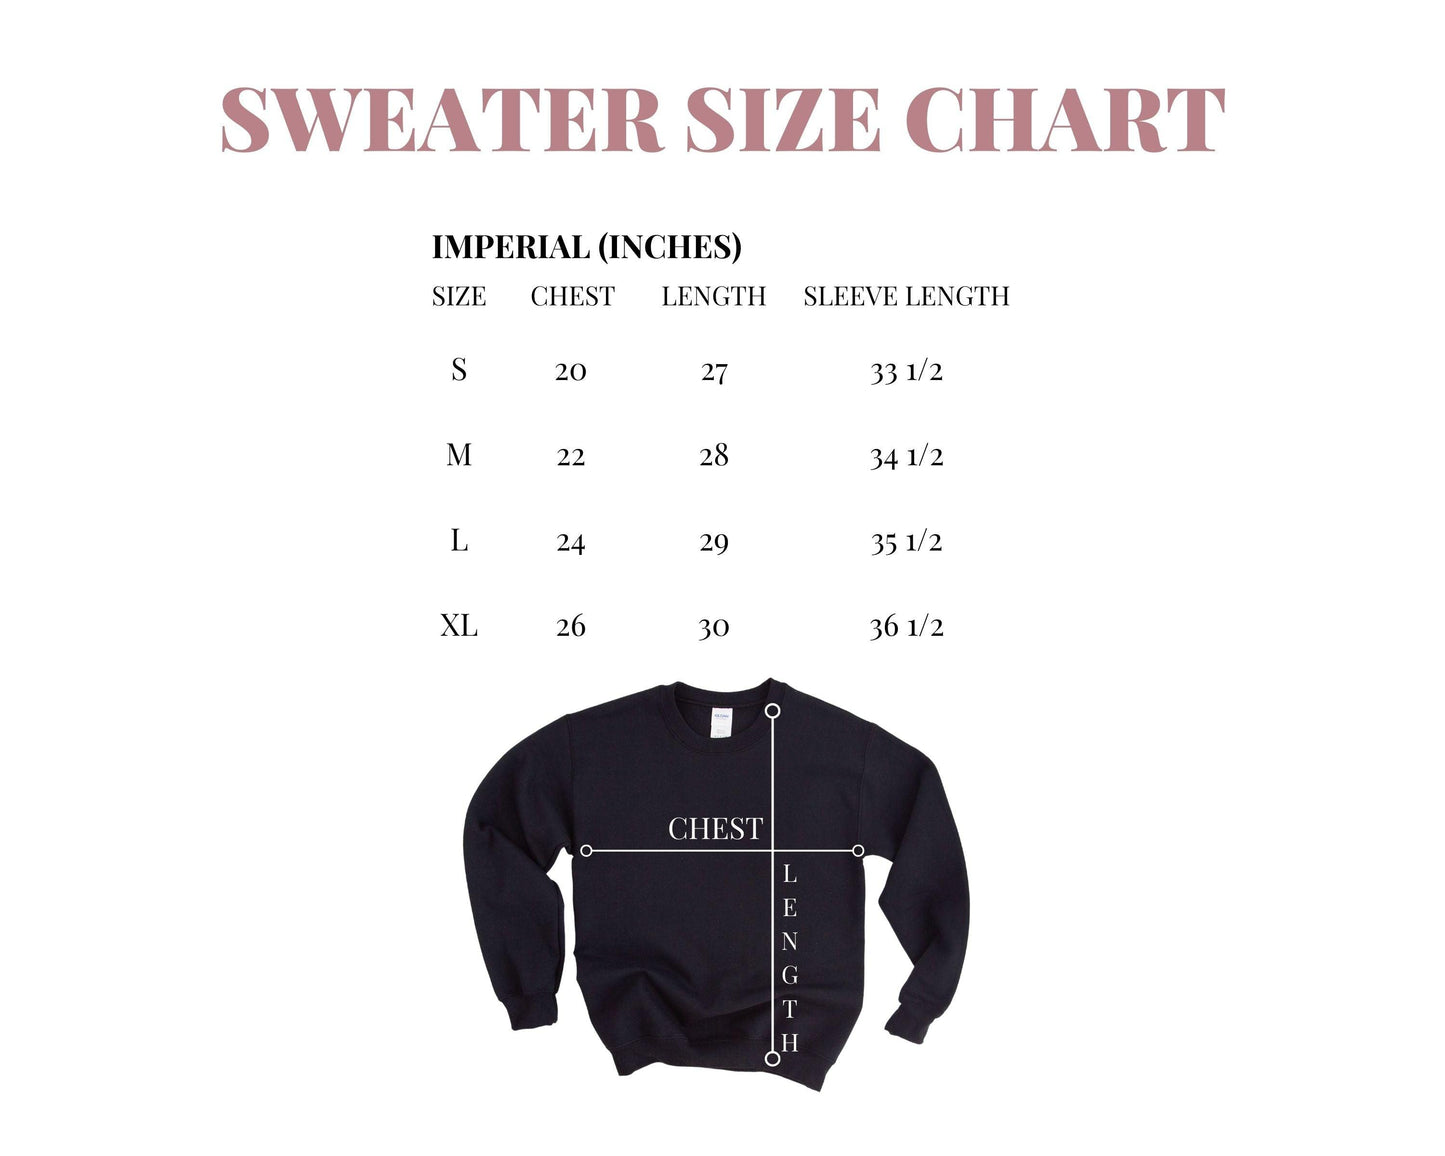 Mama Crewneck Sweatshirt - Crystal Rose Design Co.